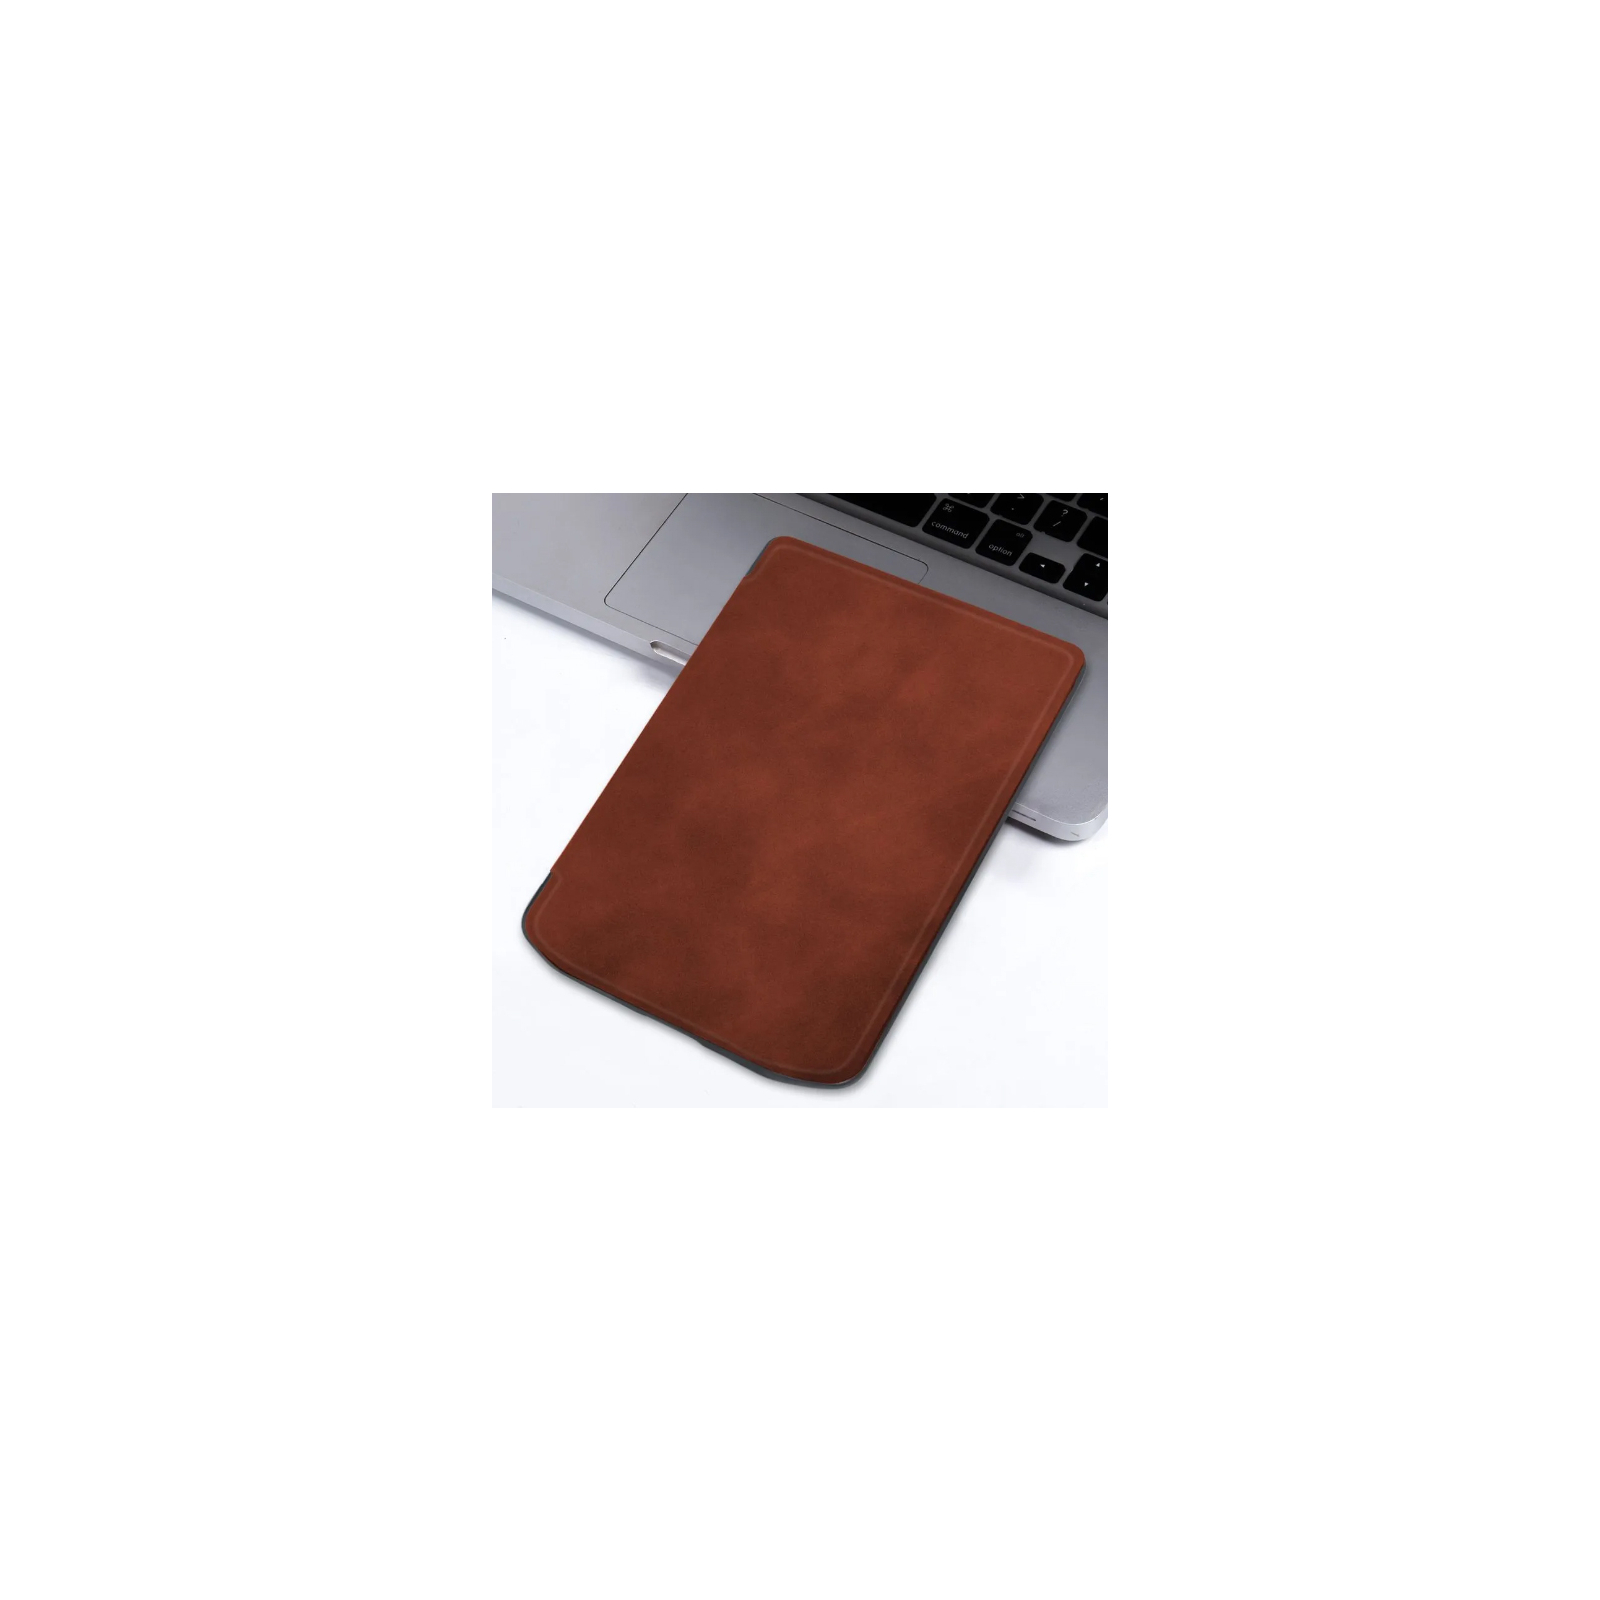 Чохол до електронної книги BeCover Smart Case PocketBook 629 Verse / 634 Verse Pro 6" Black (710450) зображення 7